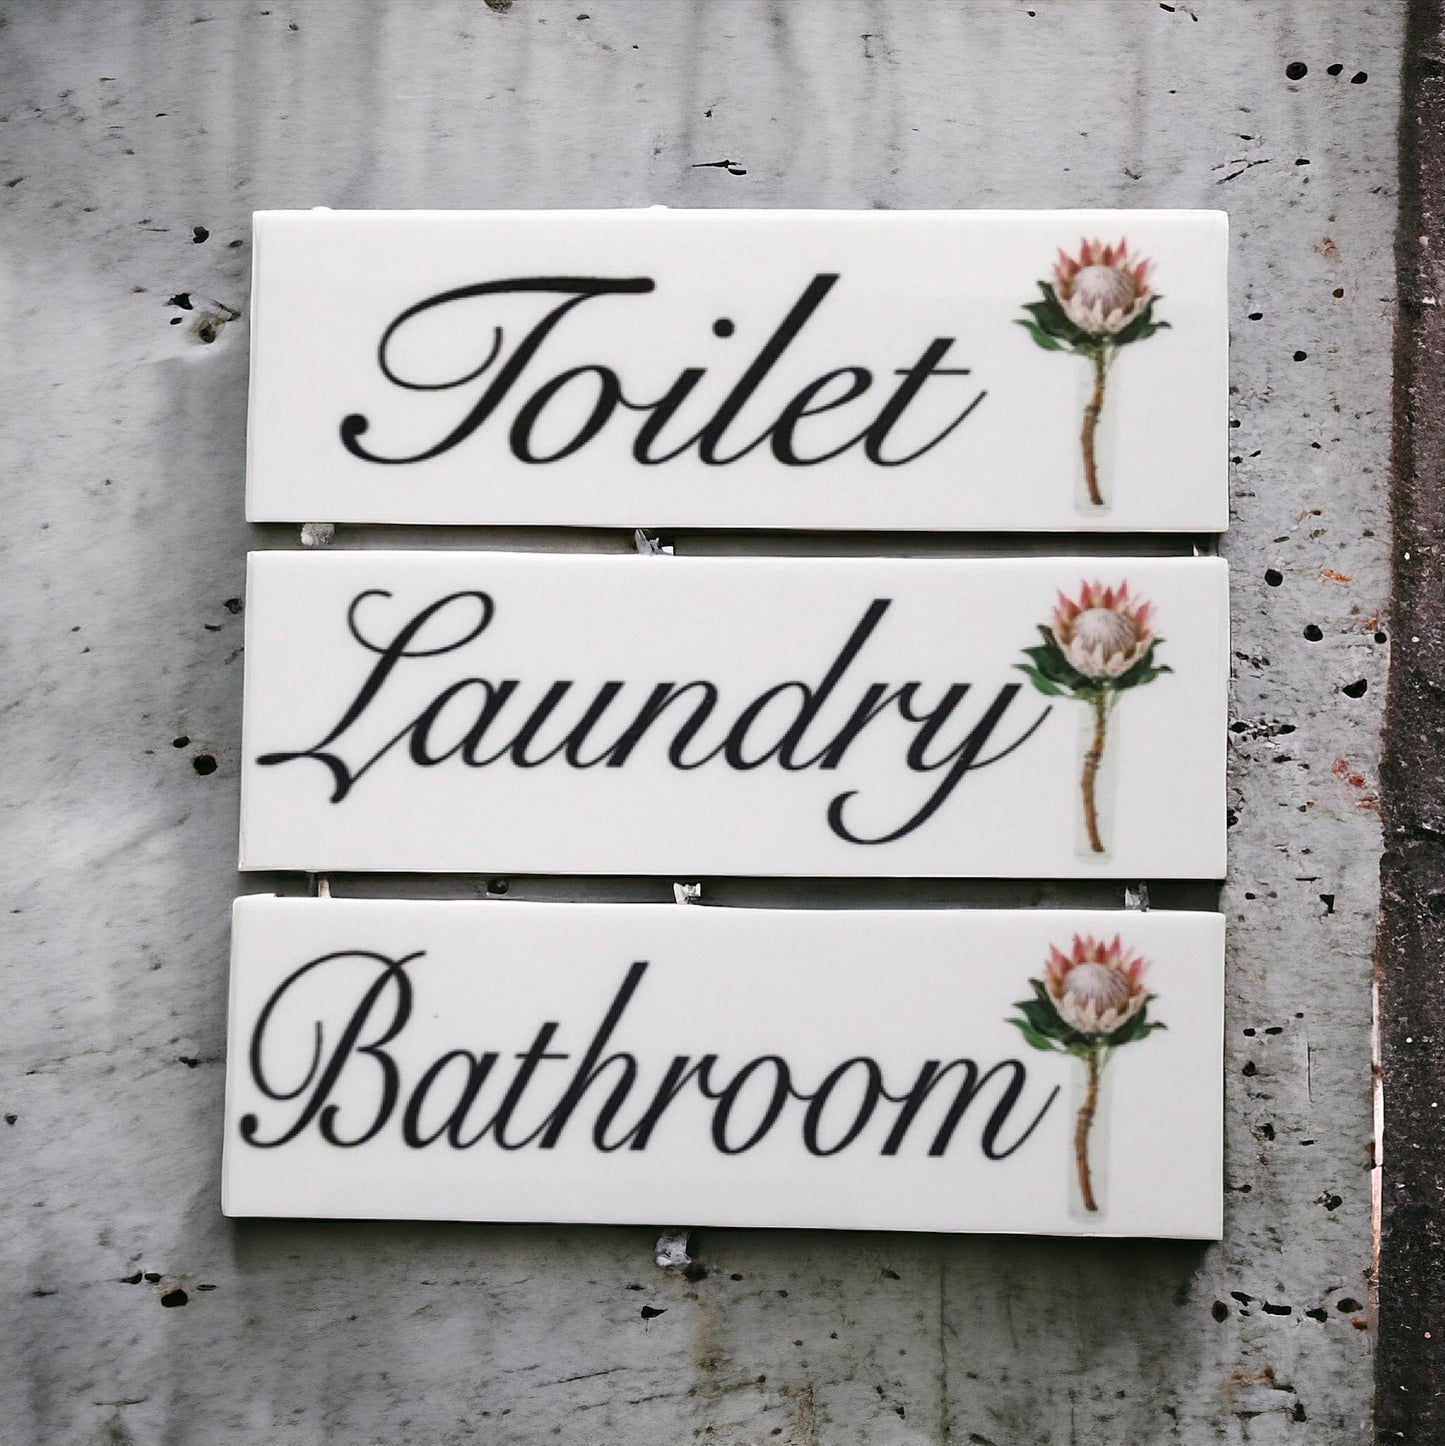 Protea Toilet Laundry Bathroom Door Sign - The Renmy Store Homewares & Gifts 